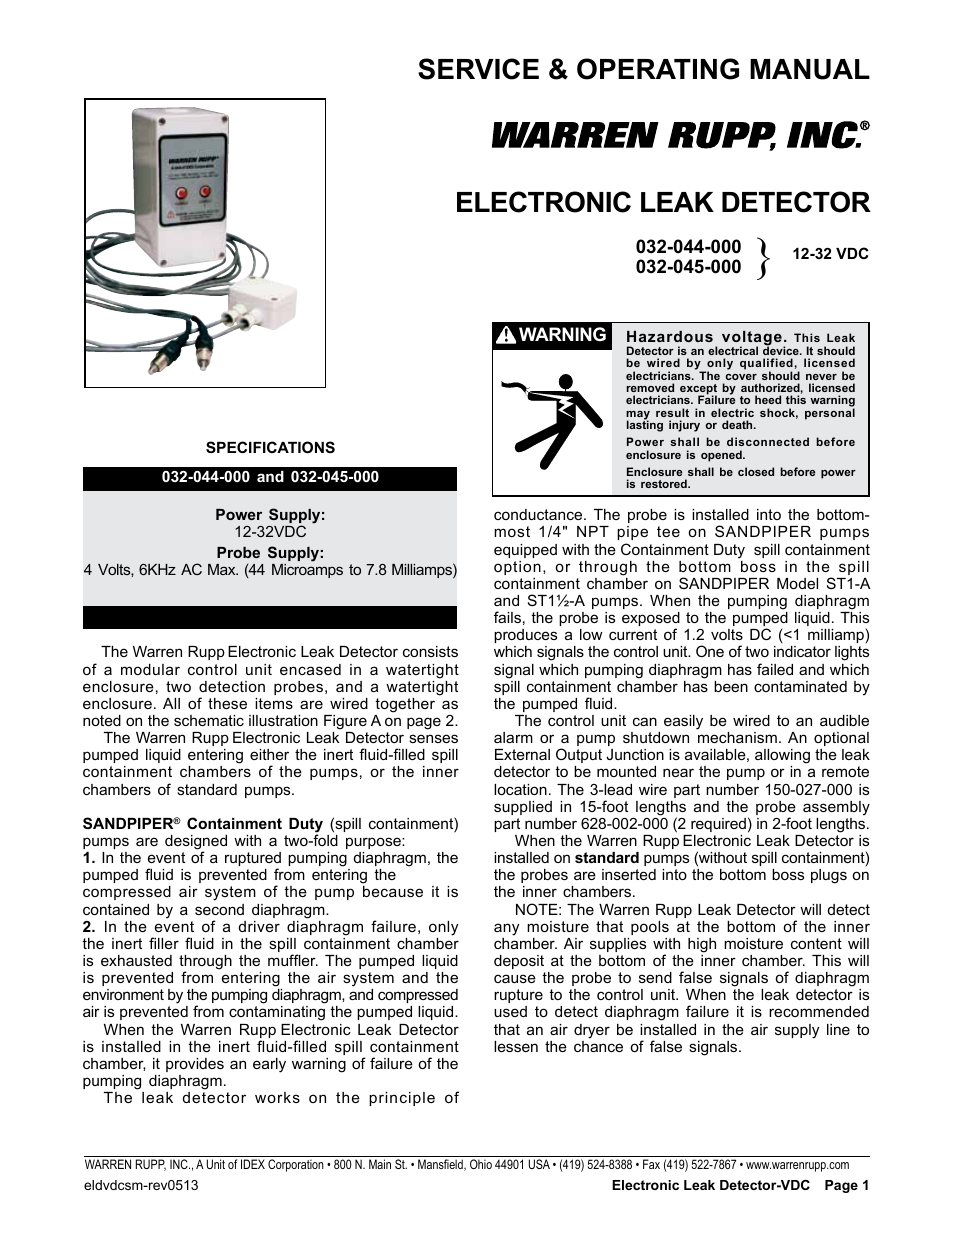 ELECTRONIC LEAK DETECTOR 032-044-000, 032-045-000